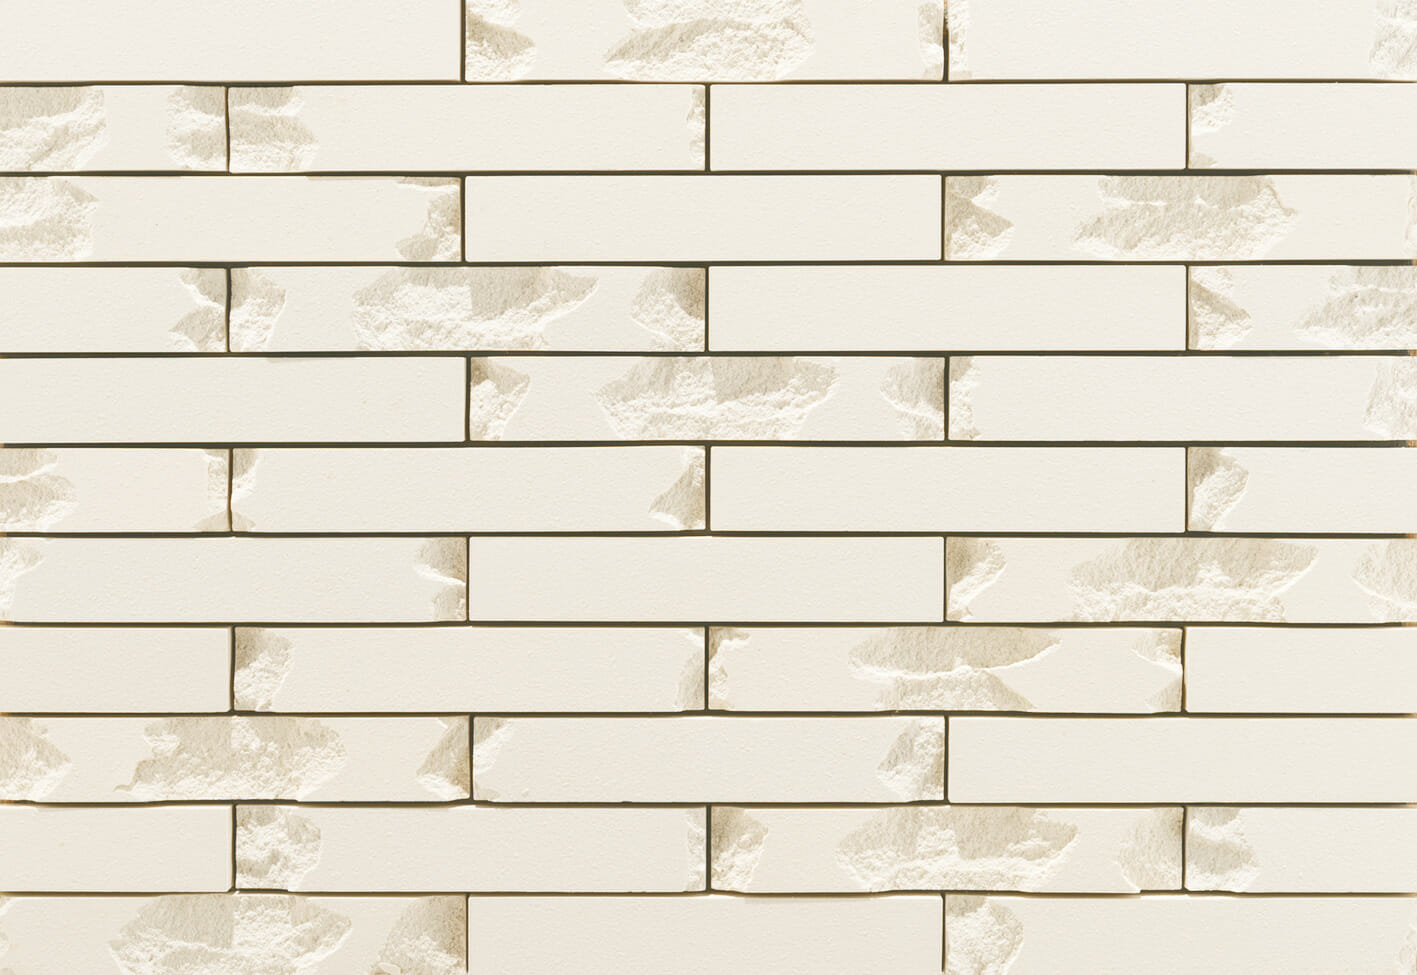 Cqe W Croquer Hi Ceramics Tiles By Hirata Tile 新築 リフォーム問わず皆様の豊かな暮らしをご提案します